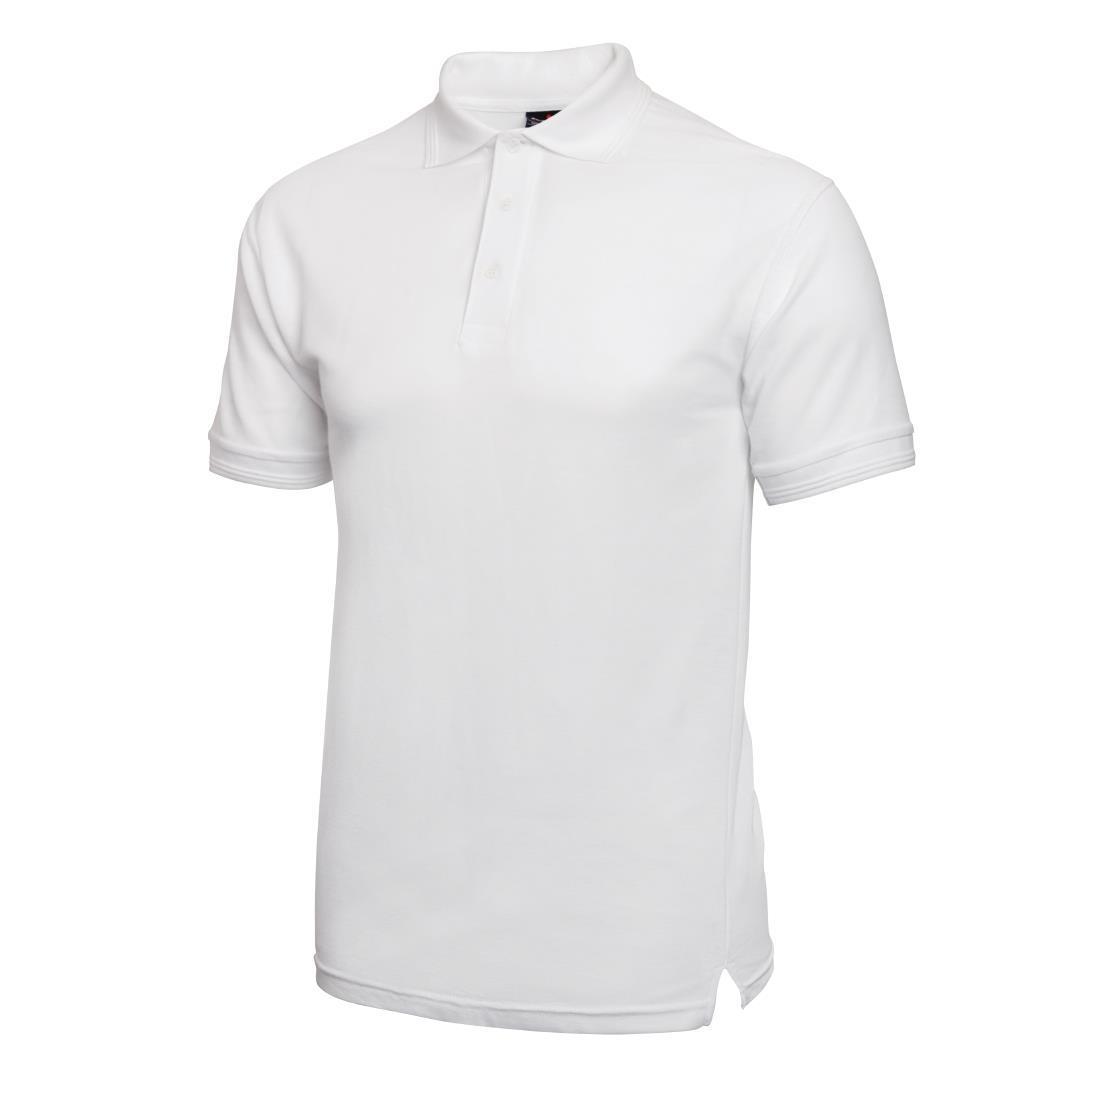 Unisex Polo Shirt White S - A734-S  - 2